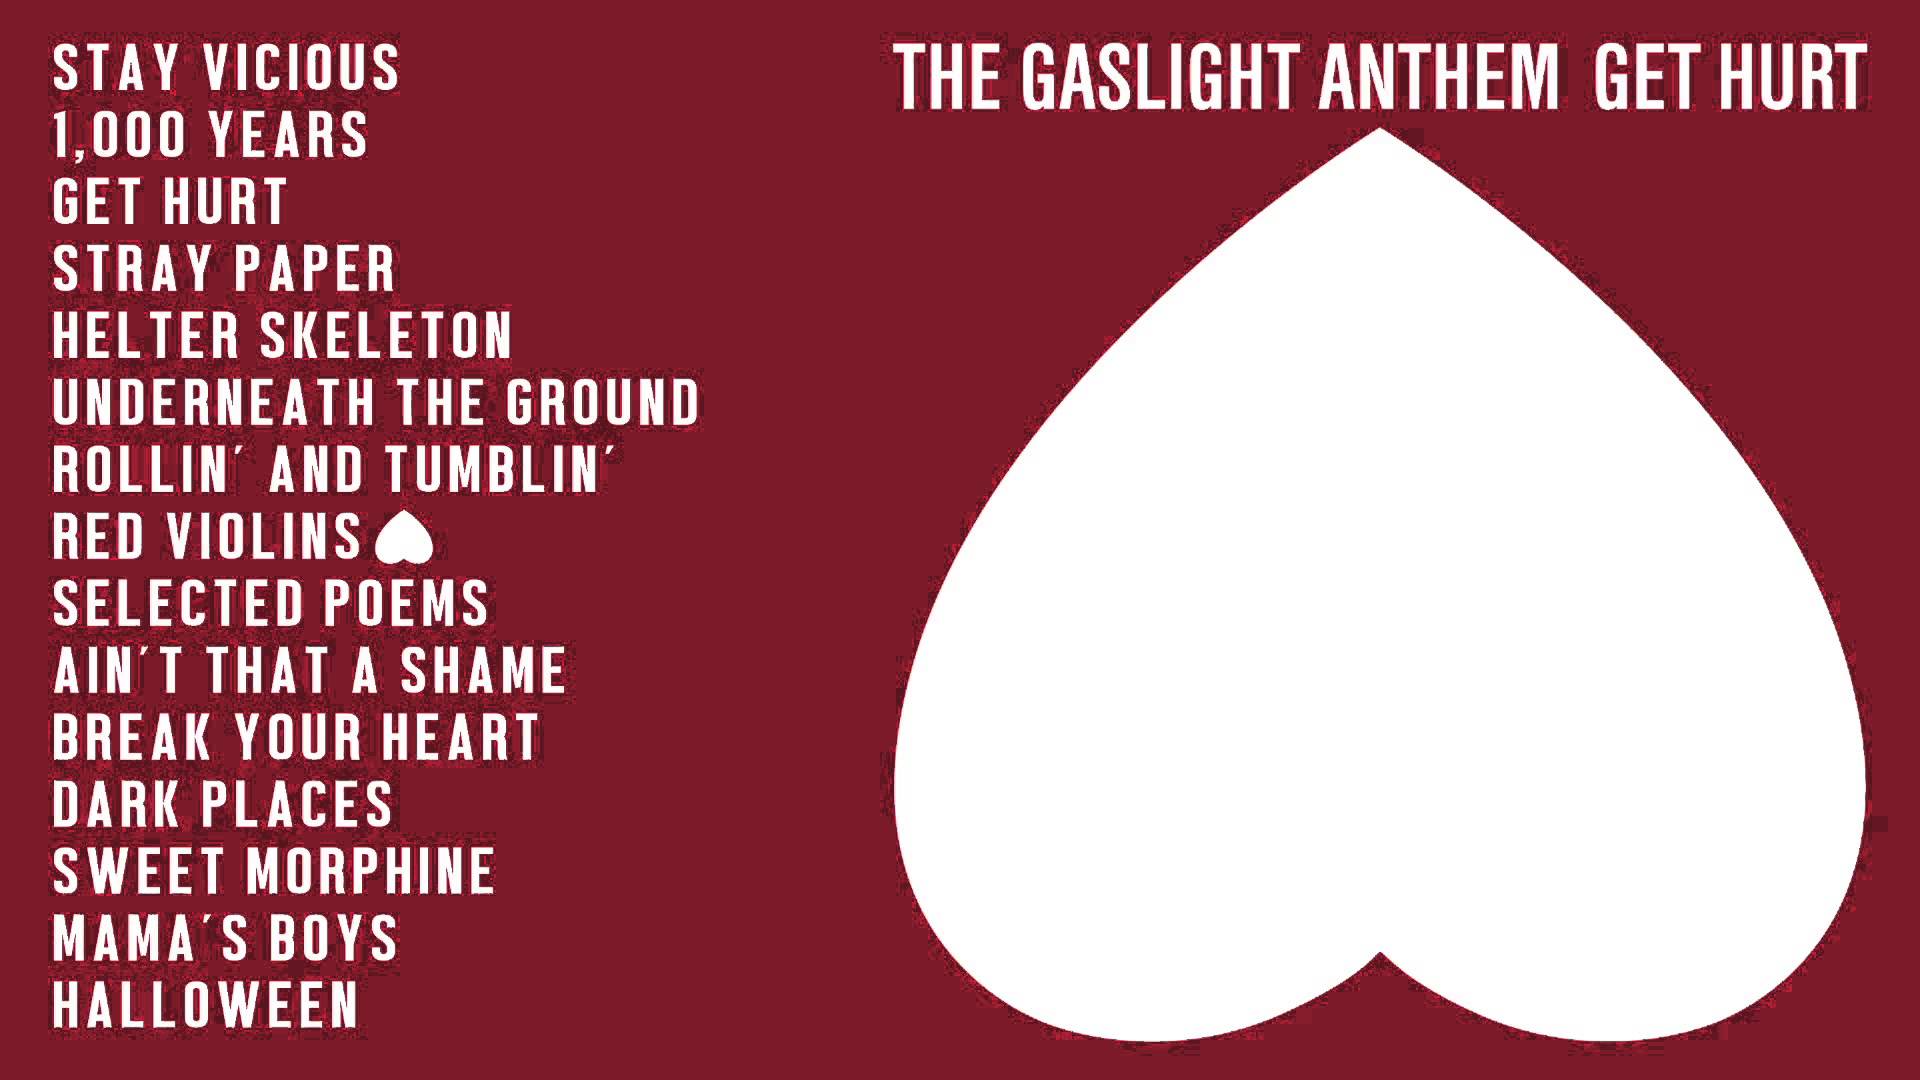 The Gaslight Anthem - Get Hurt Albumplayer - YouTube